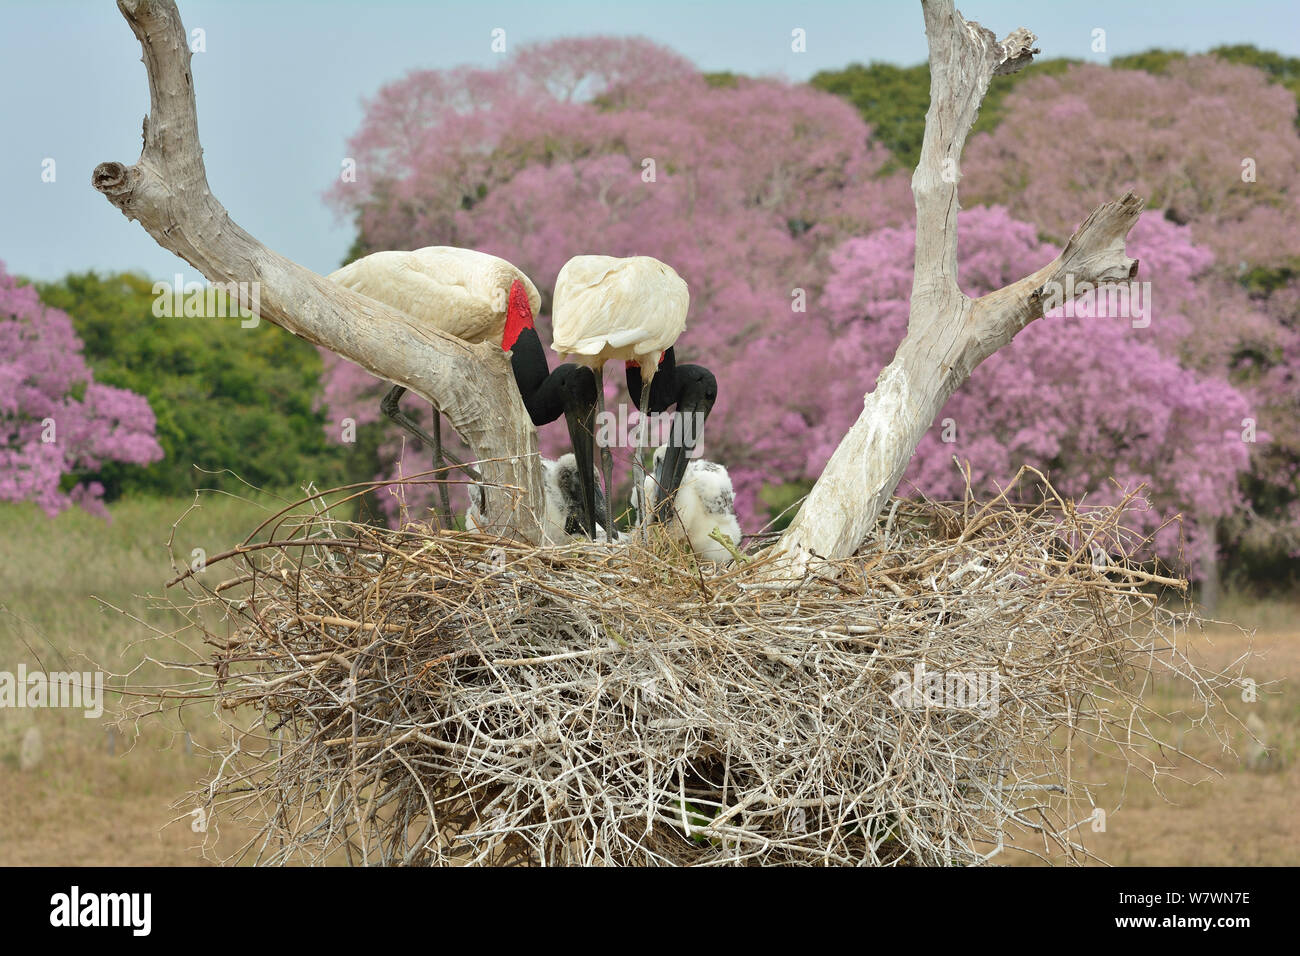 Jabiru (Jabiru mycteria) stork parents at nest with Pink Ipe trees in flower in background (Tabebuia ipe / Handroanthus impetiginosus) Pantanal, Mato Grosso State, Western Brazil. Stock Photo